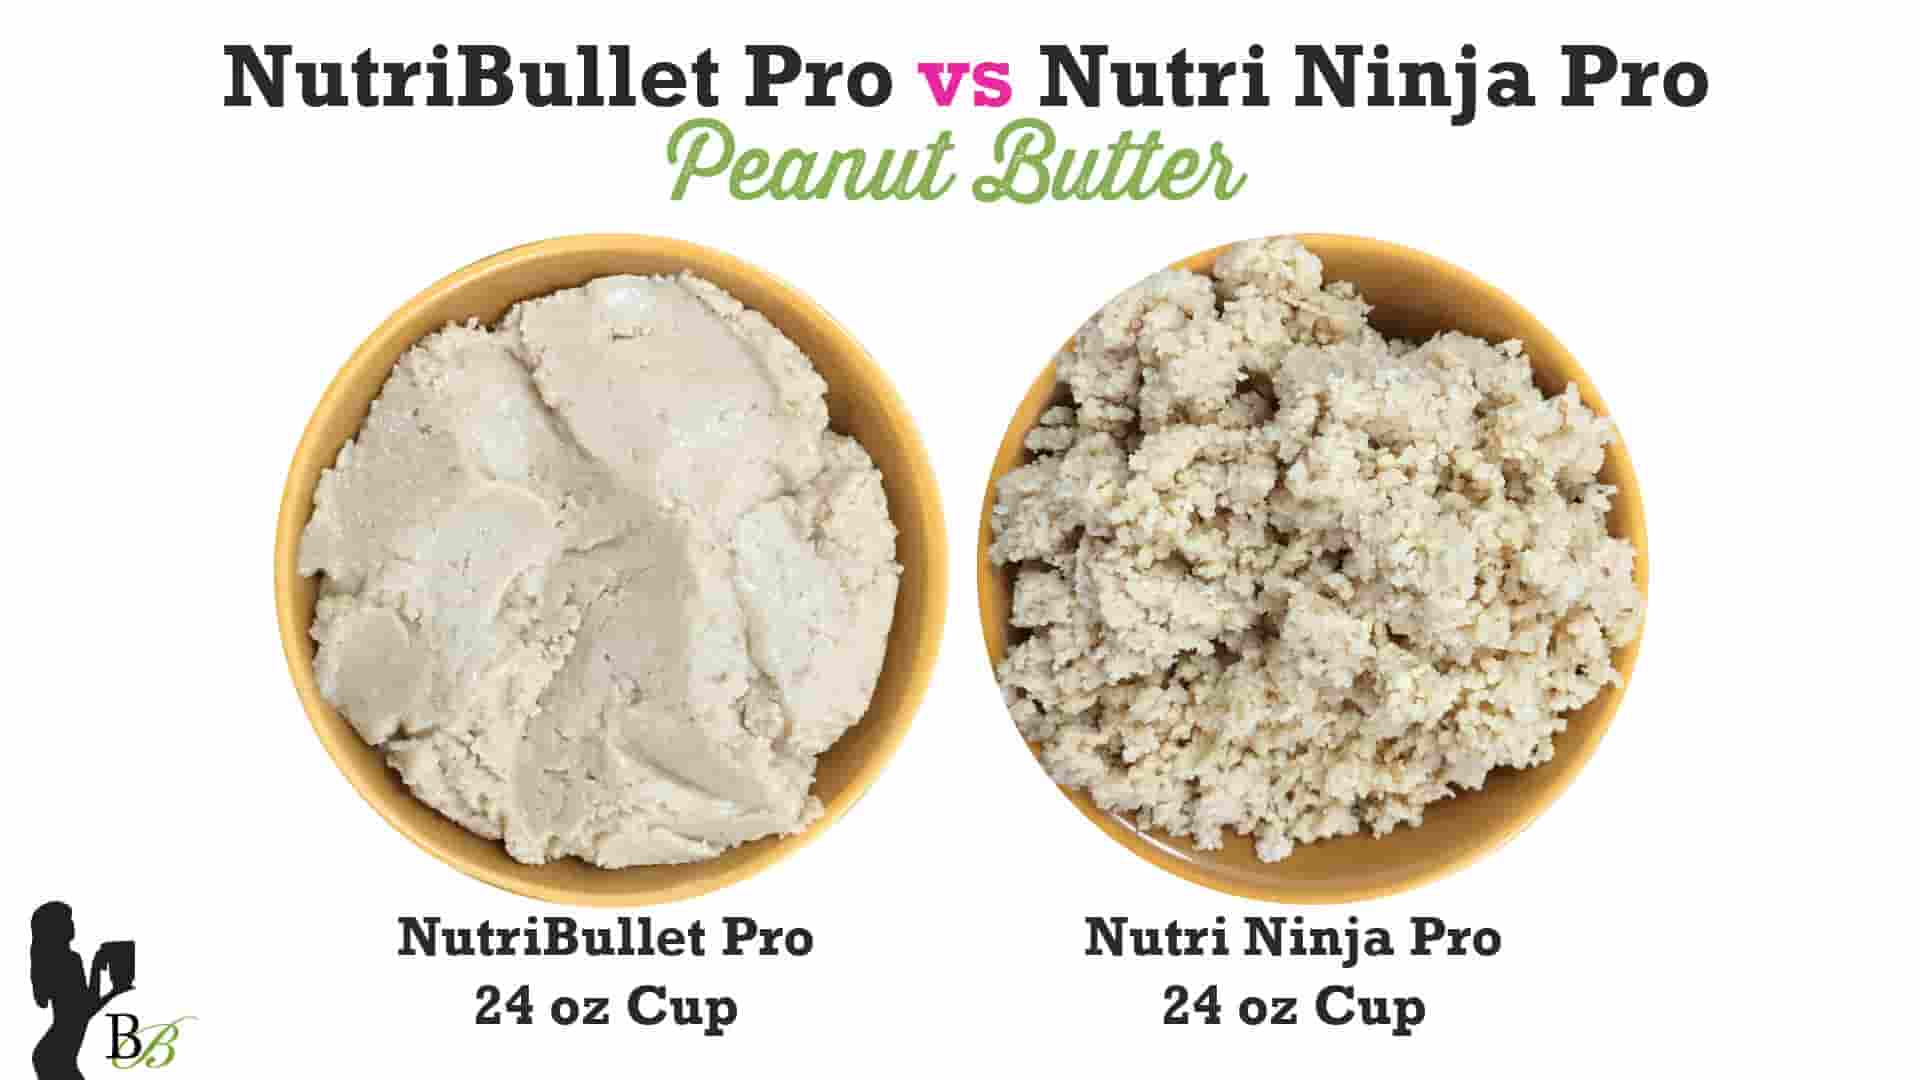 NutriBullet Pro vs Nutri Ninja Pro Peanut Butter Test